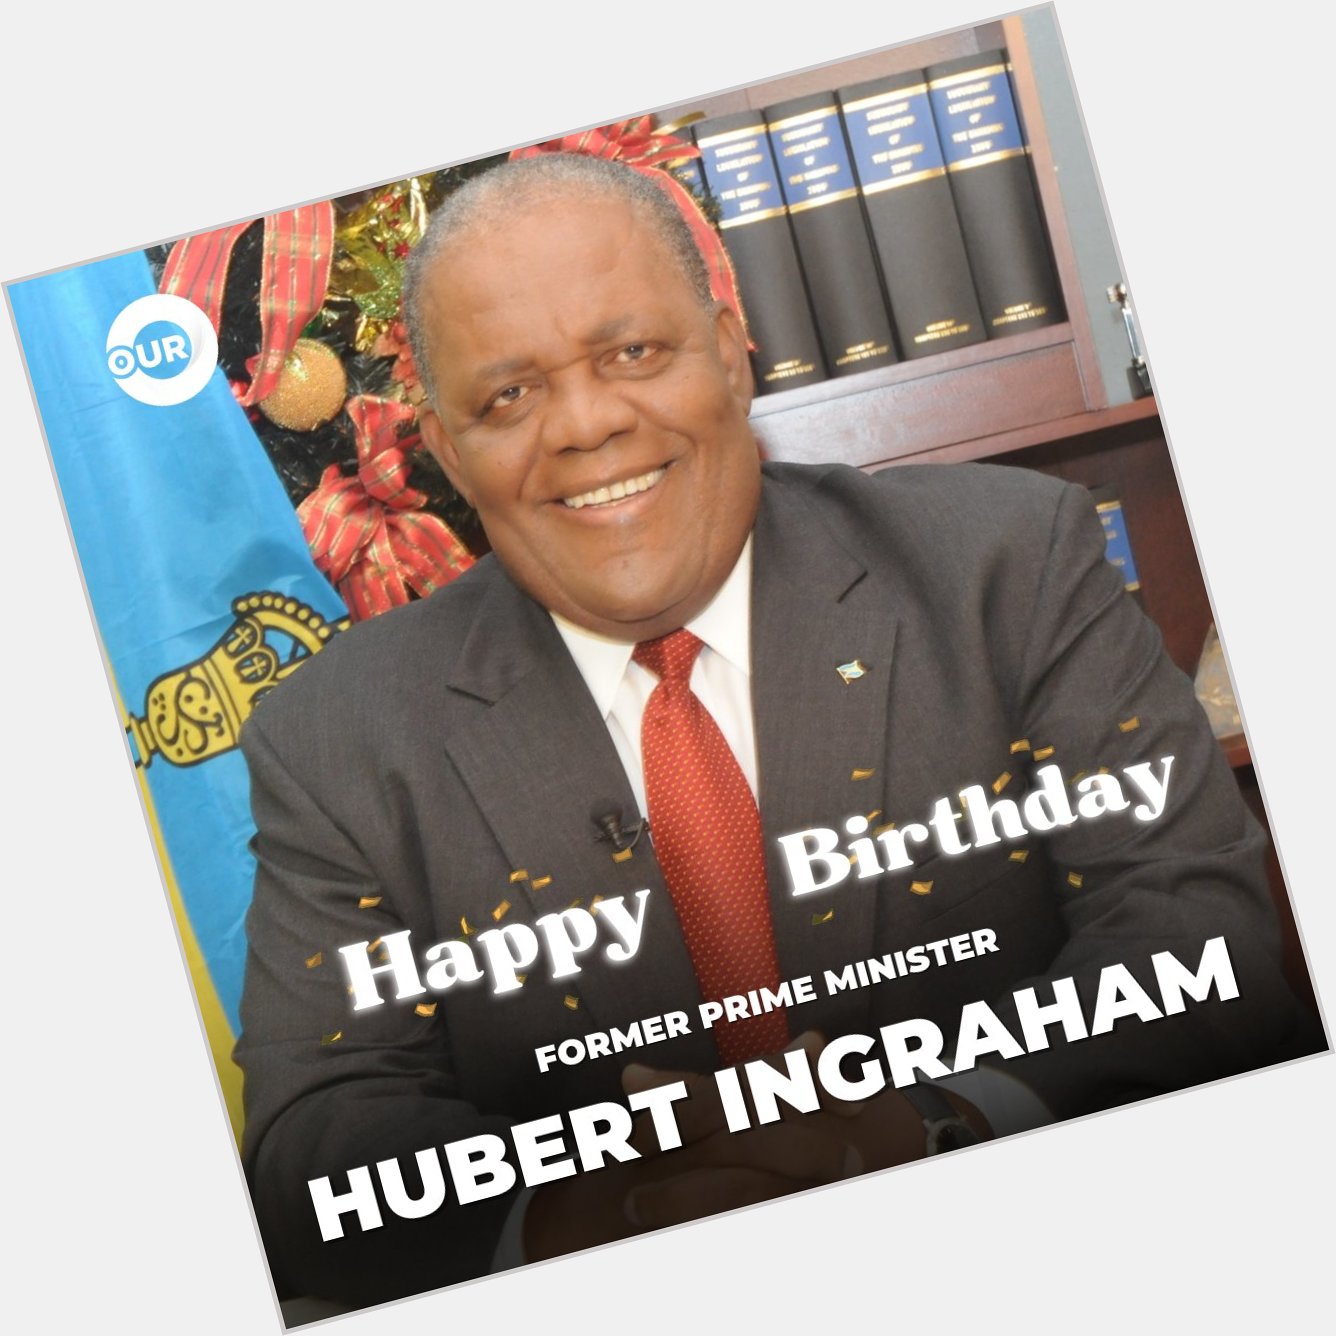 Our News Wishes Former Prime Minister Hubert Ingraham Happy Birthday! 